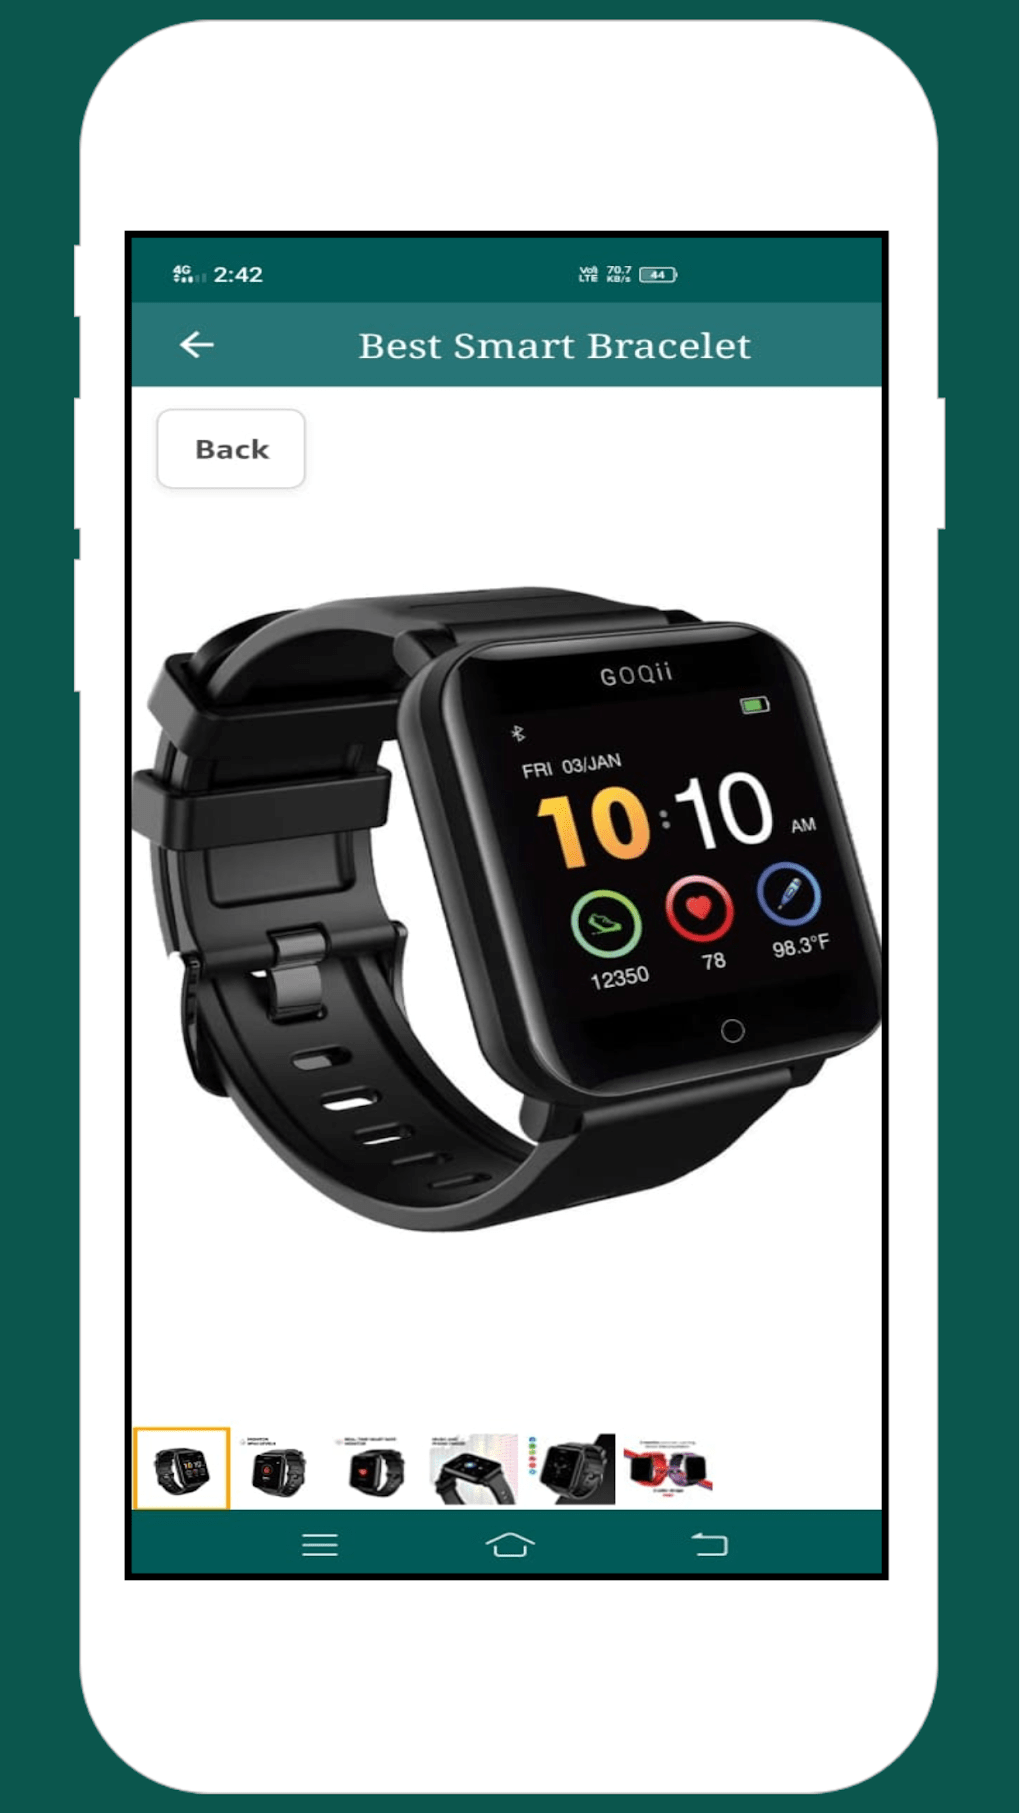 Smart Bracelet Watch App for Android - Download